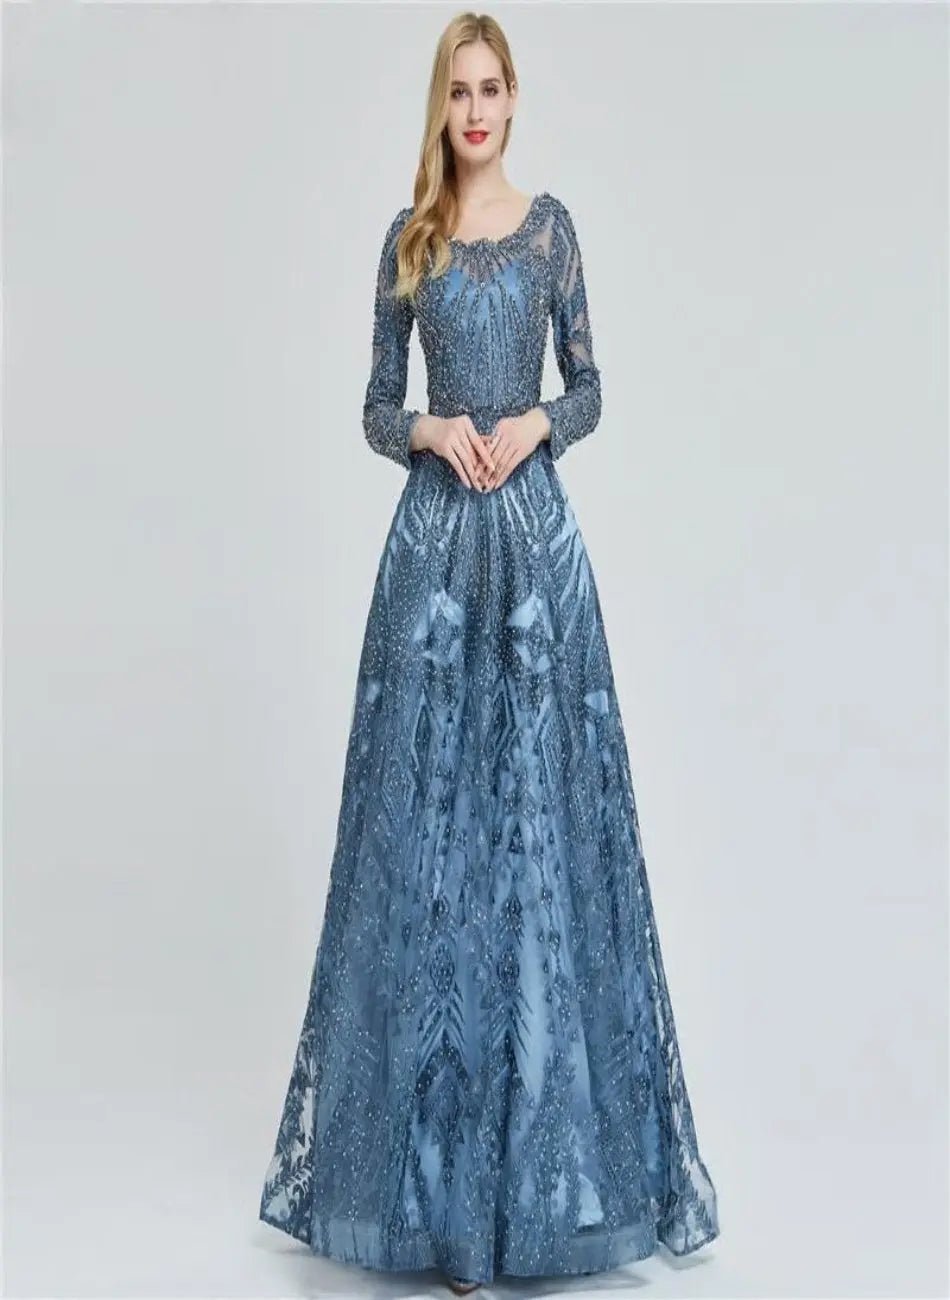 HENA - Luxury O-Neck Crystal Evening Gown - Mscooco.co.uk